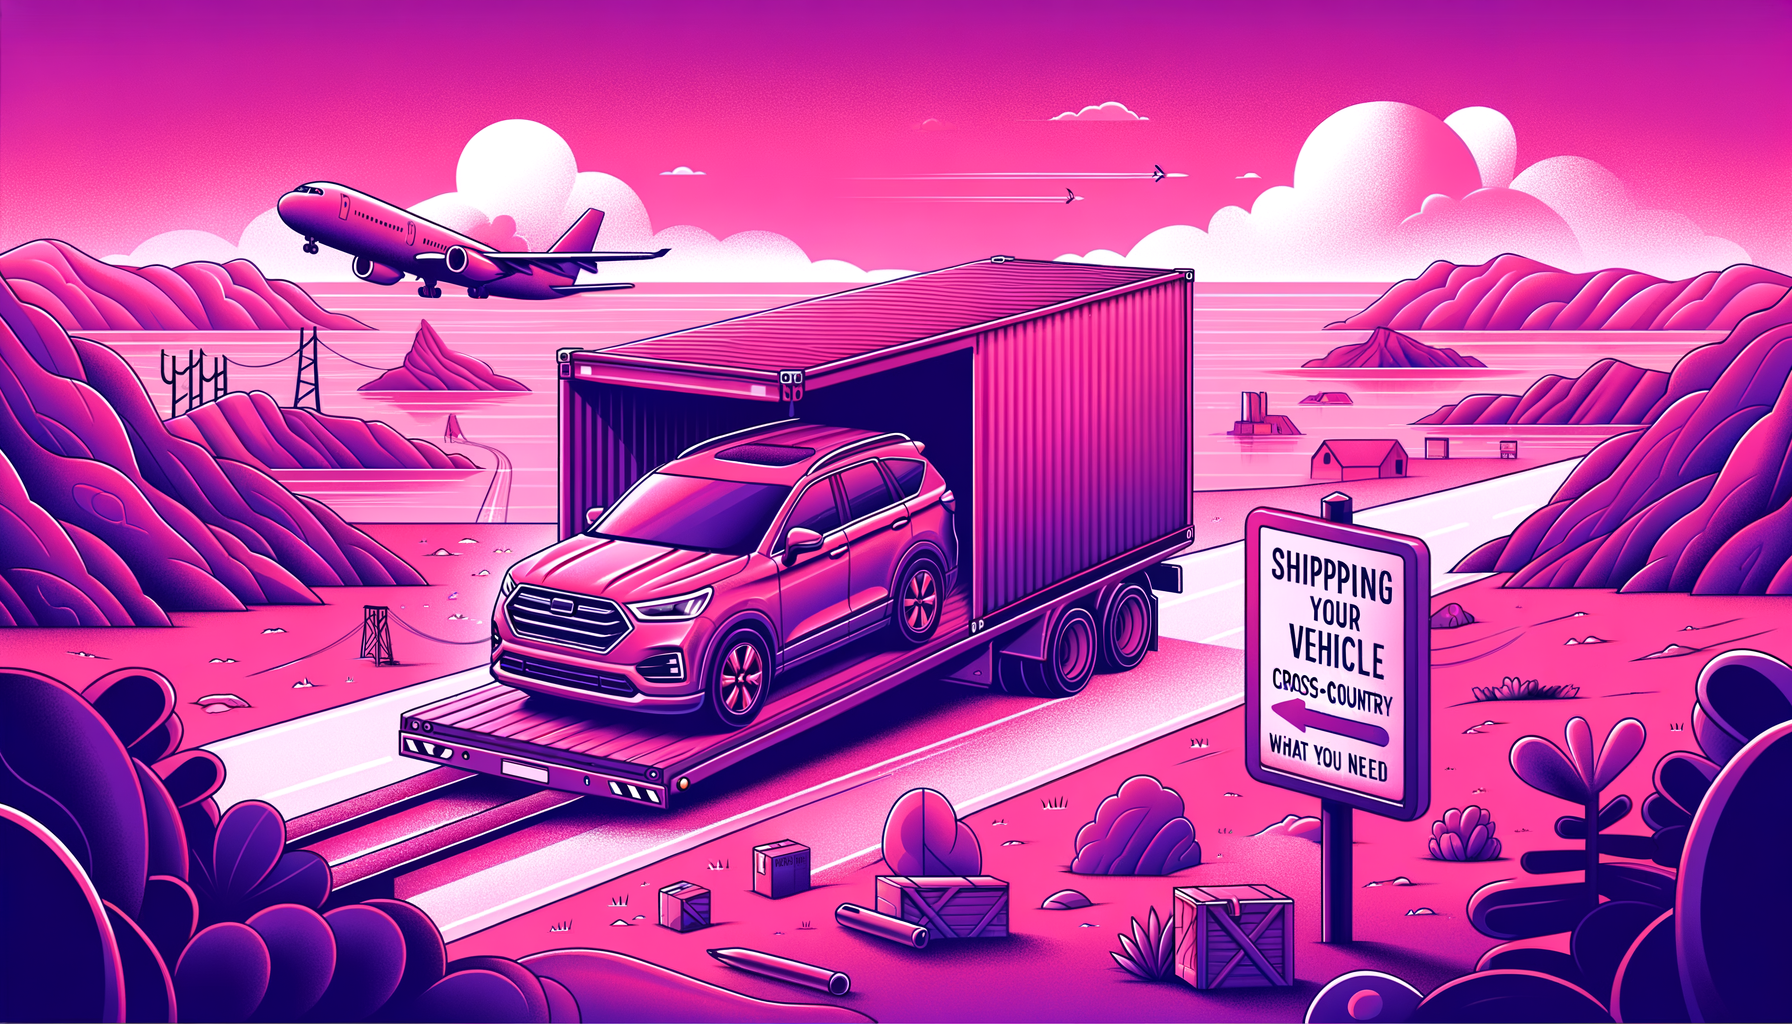 Cartoon-like fuschia colored truck carrying a vehicle for cross-country shipping.